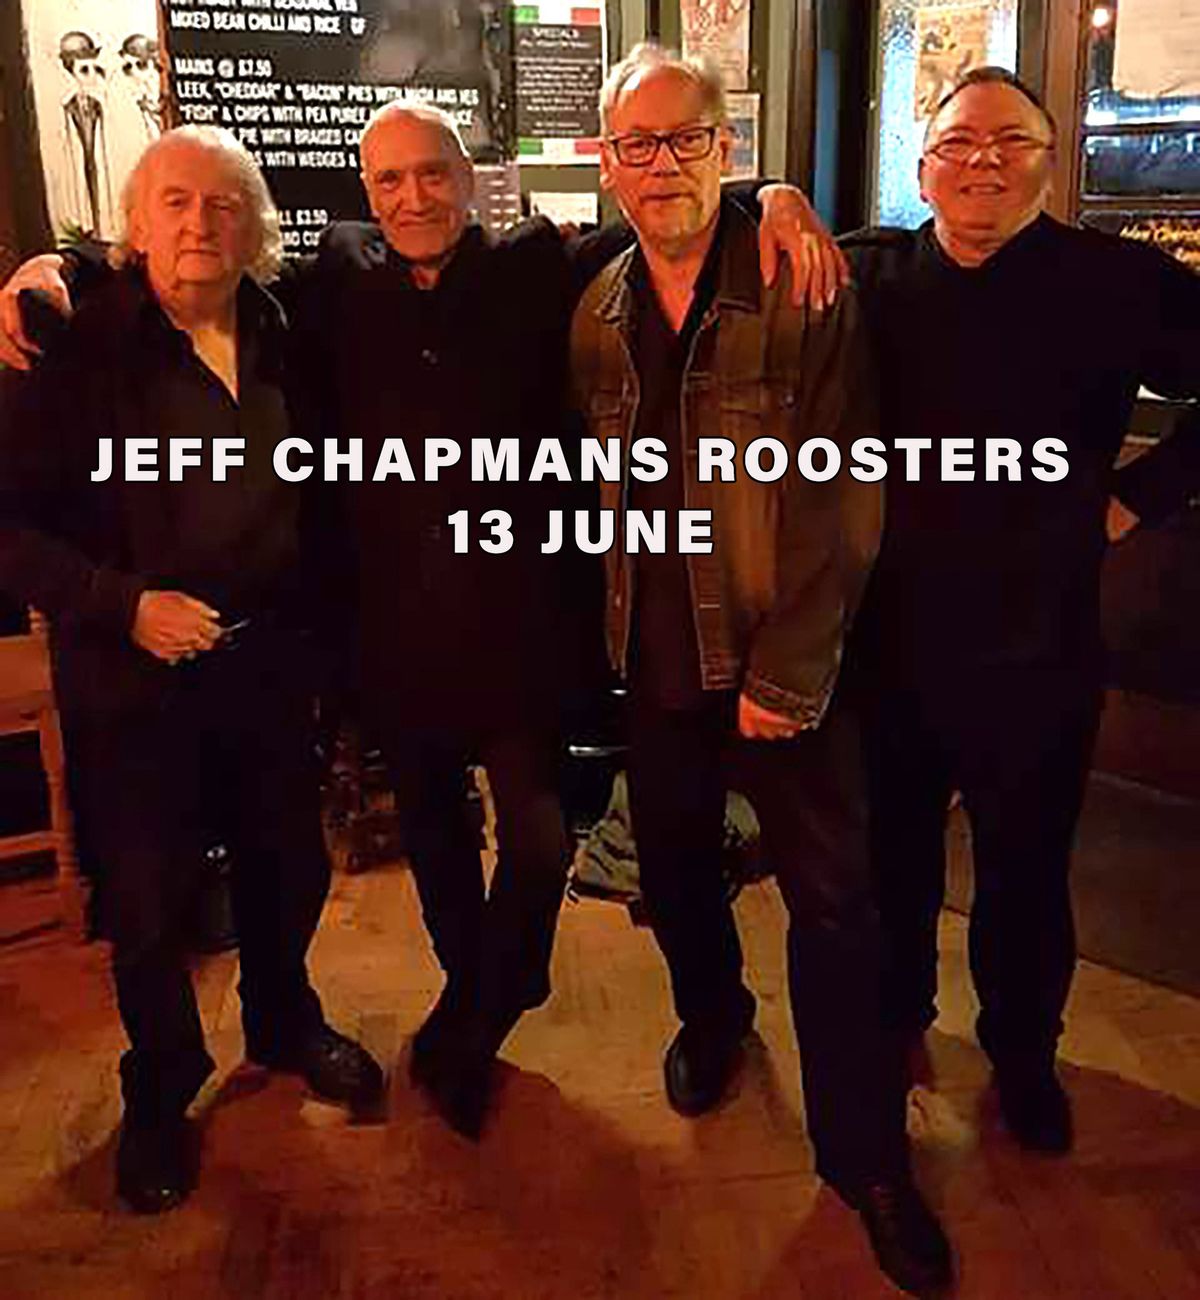 Jeff Chapman's Roosters play Wilko Johnson